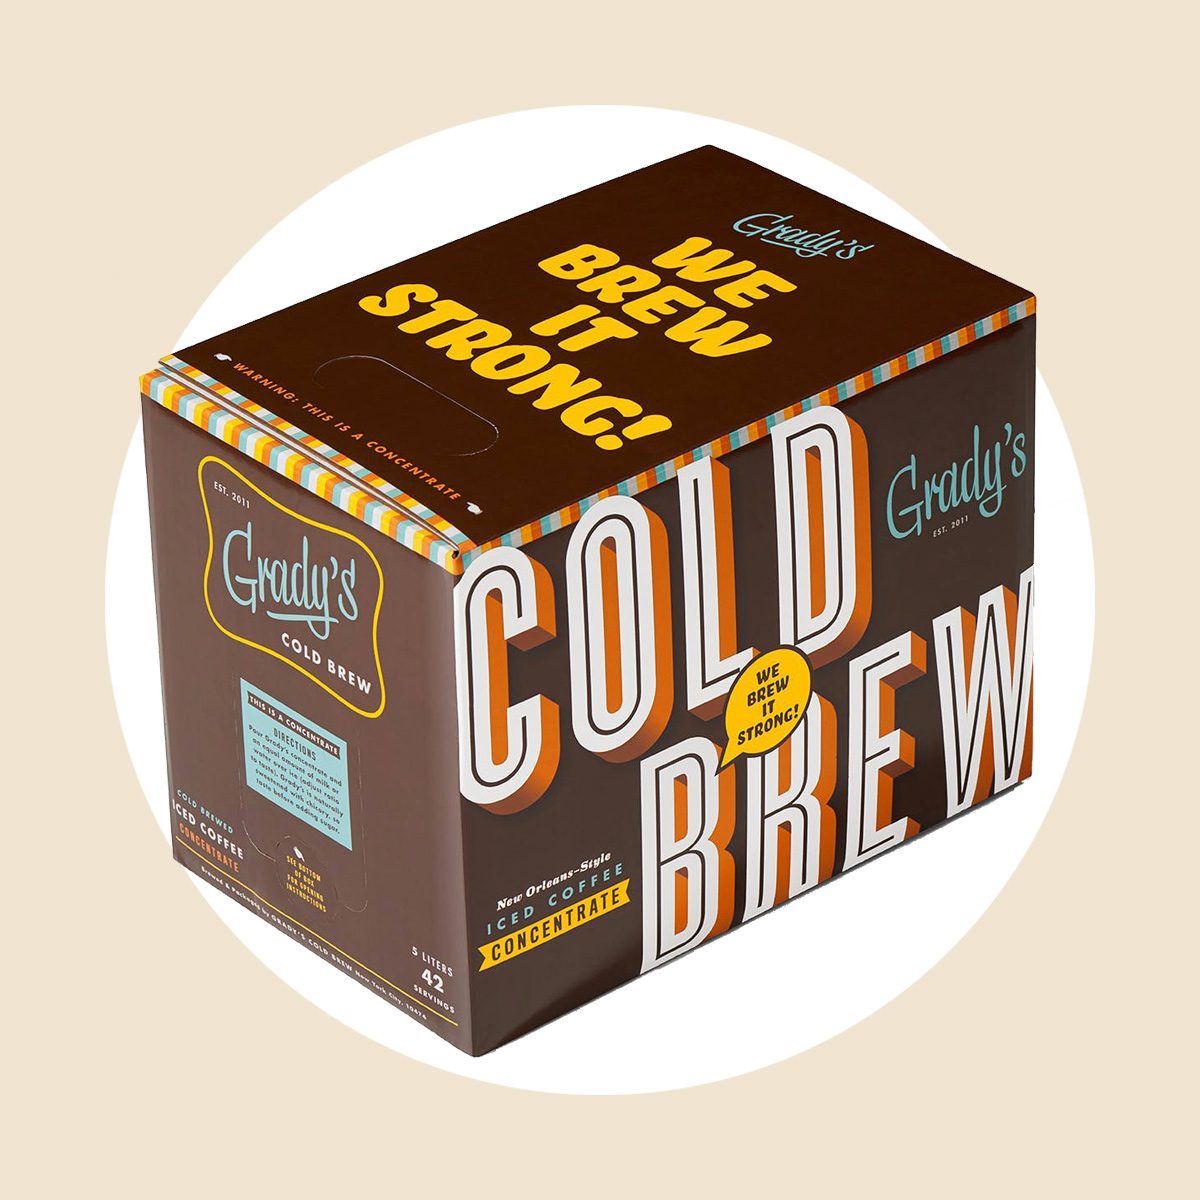 Best Cold Brew Coffee Brands (2023) Top Picks